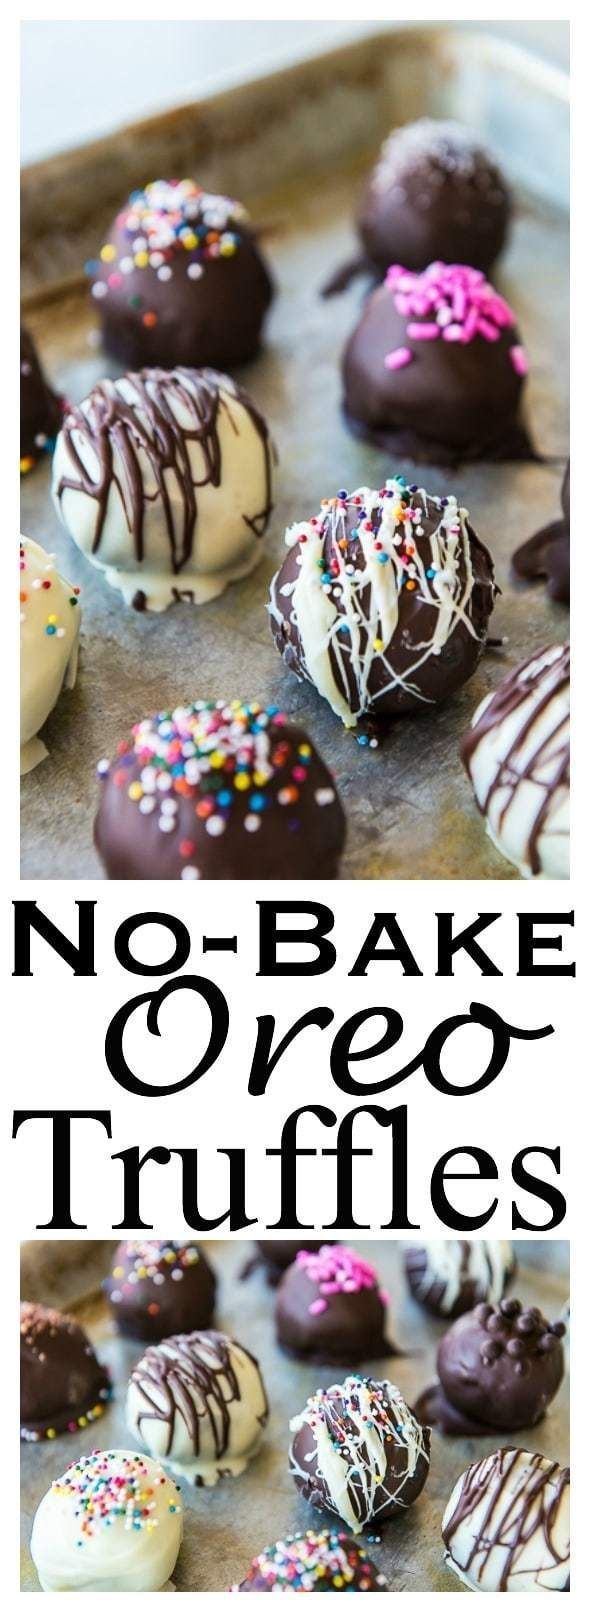 Oreo Truffles - One of the Best Easy Dessert Recipes - No Baking! -   18 xmas food desserts simple ideas